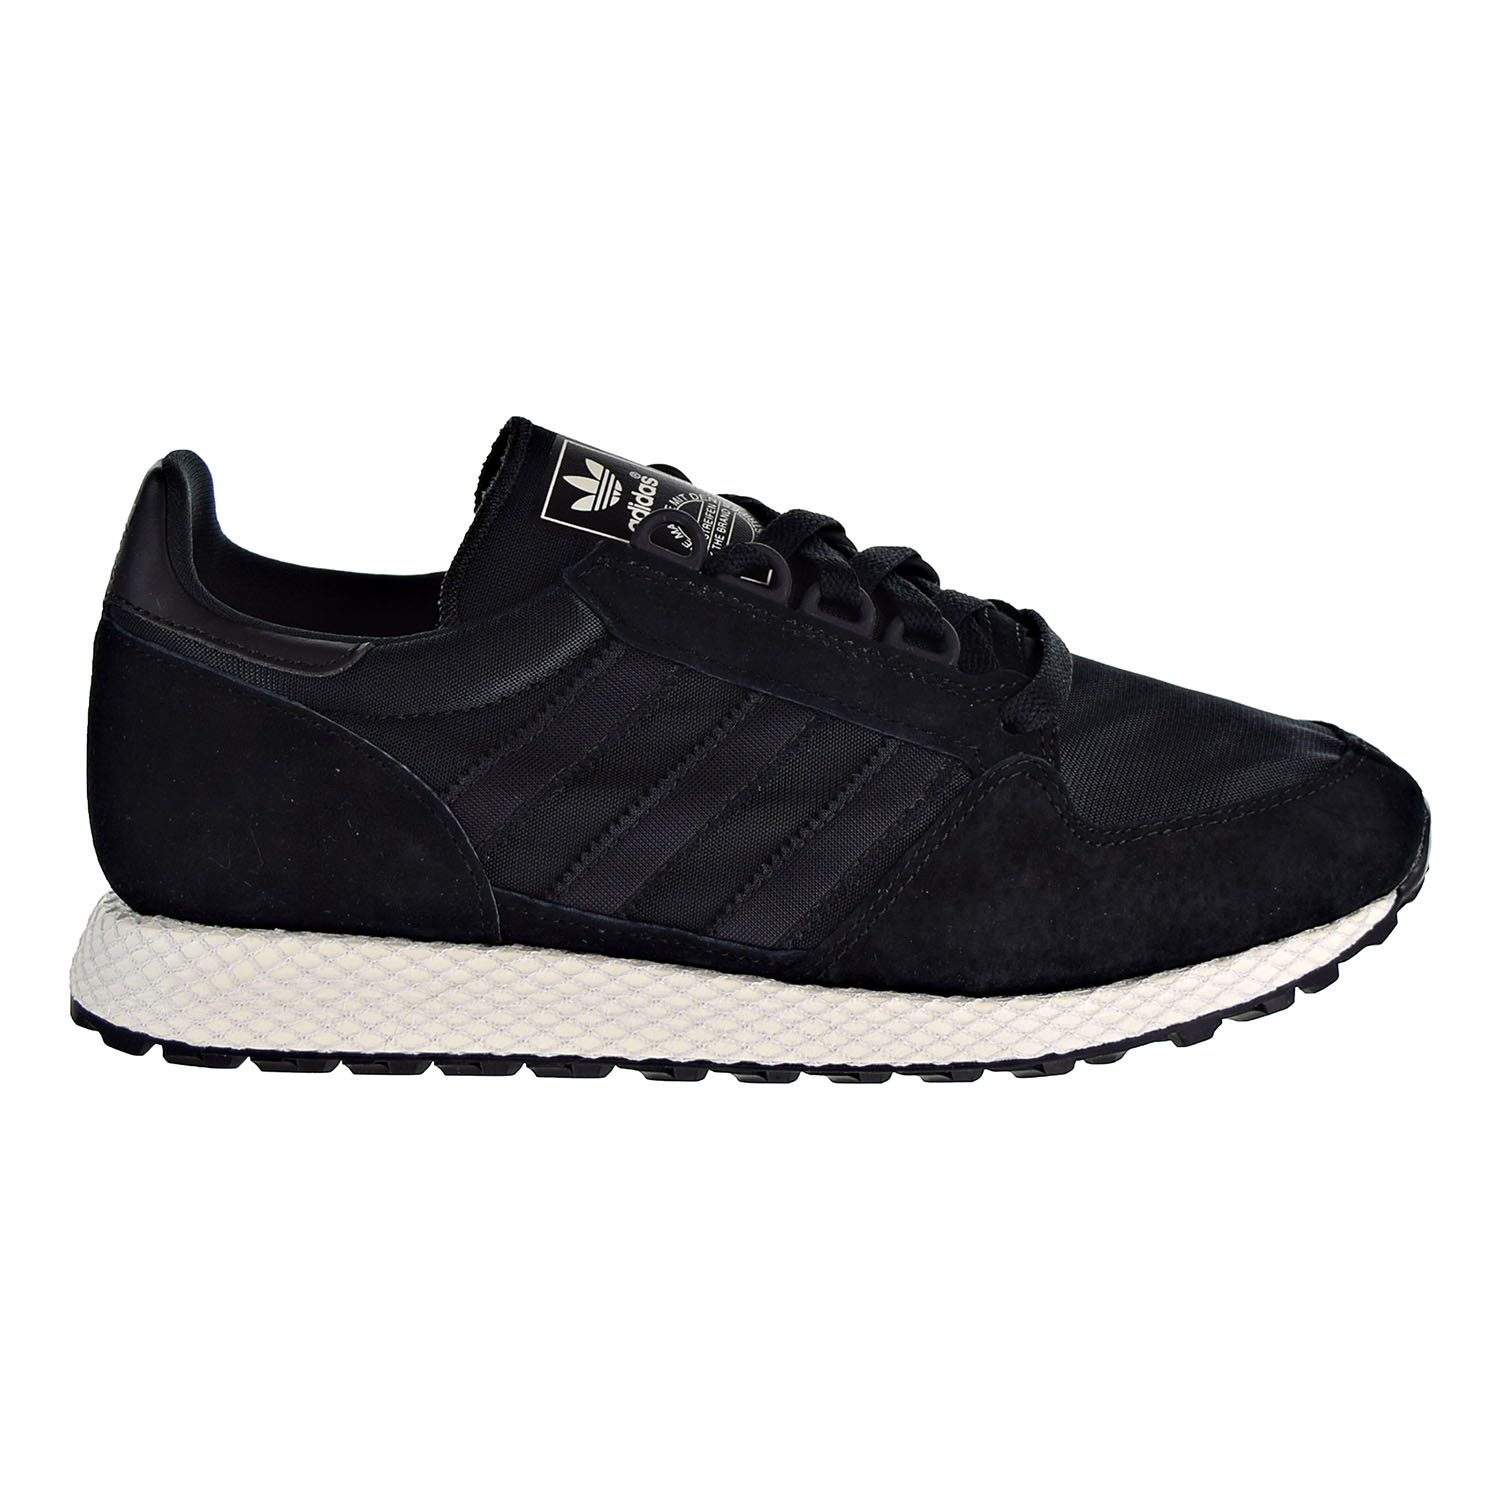 minor width Neglect Adidas Forest Grove Men's Shoes Core Black b37960